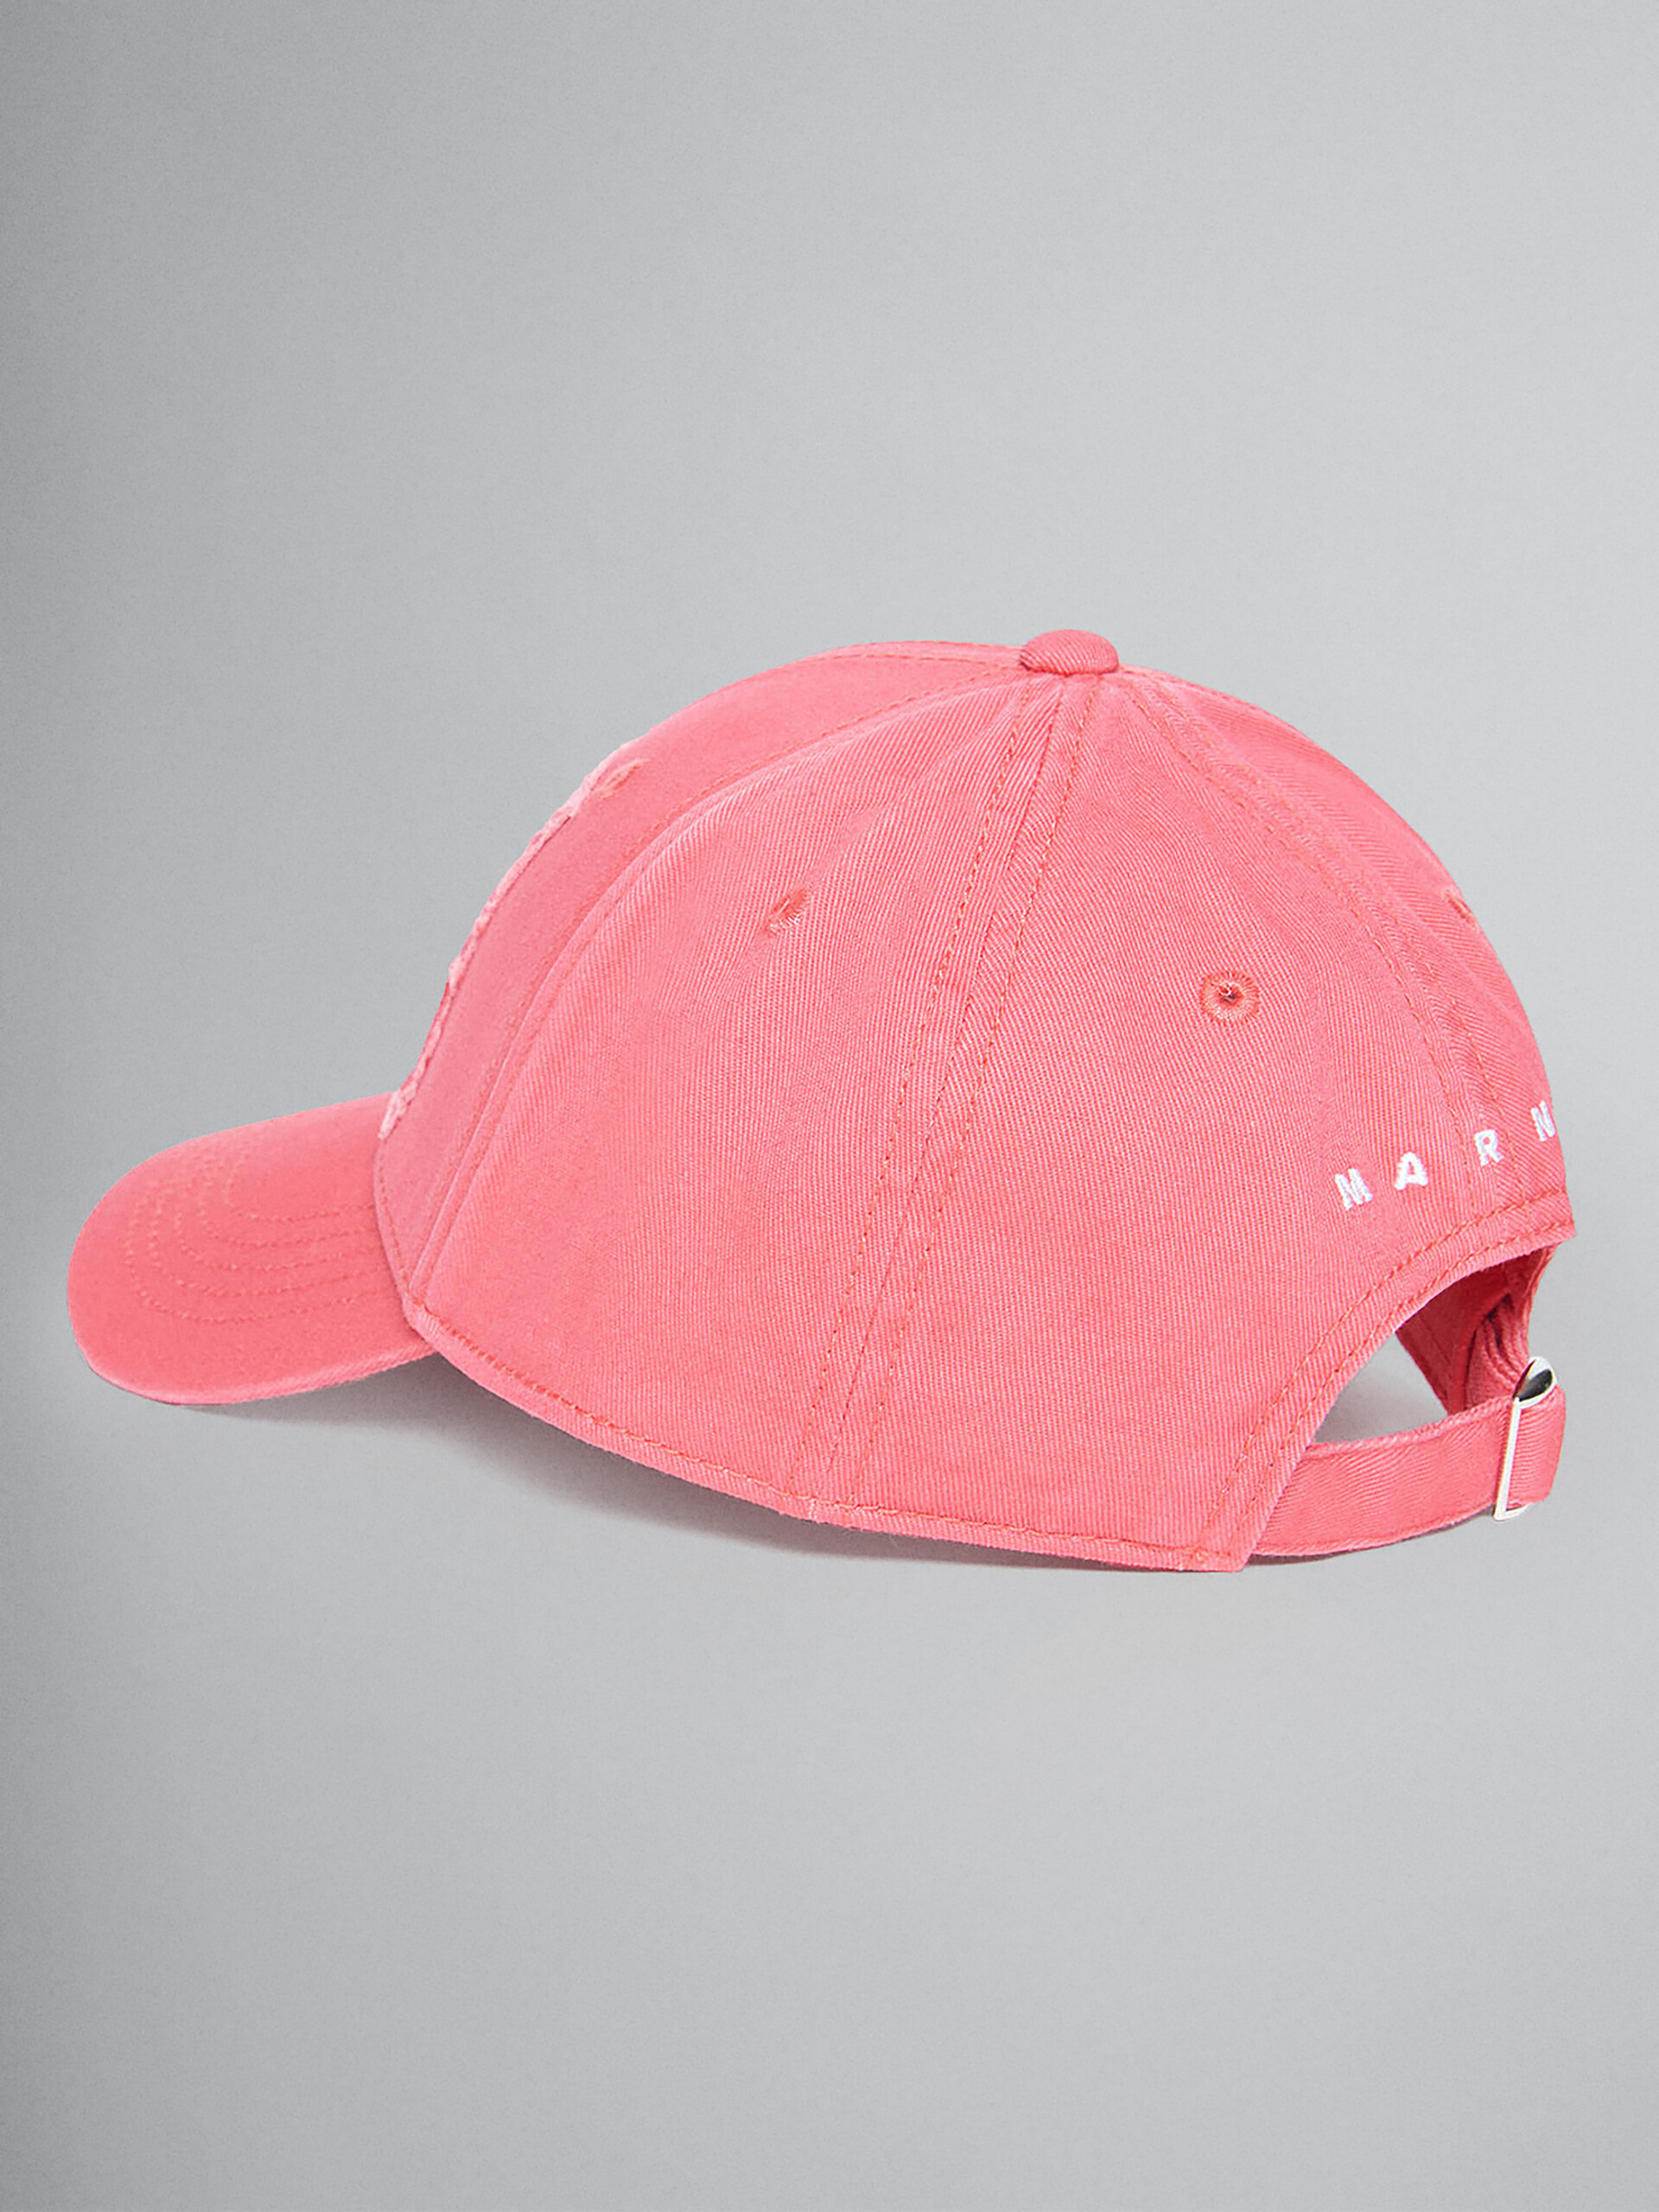 Fuchsia baseball cap with Big M logo - Caps - Image 2